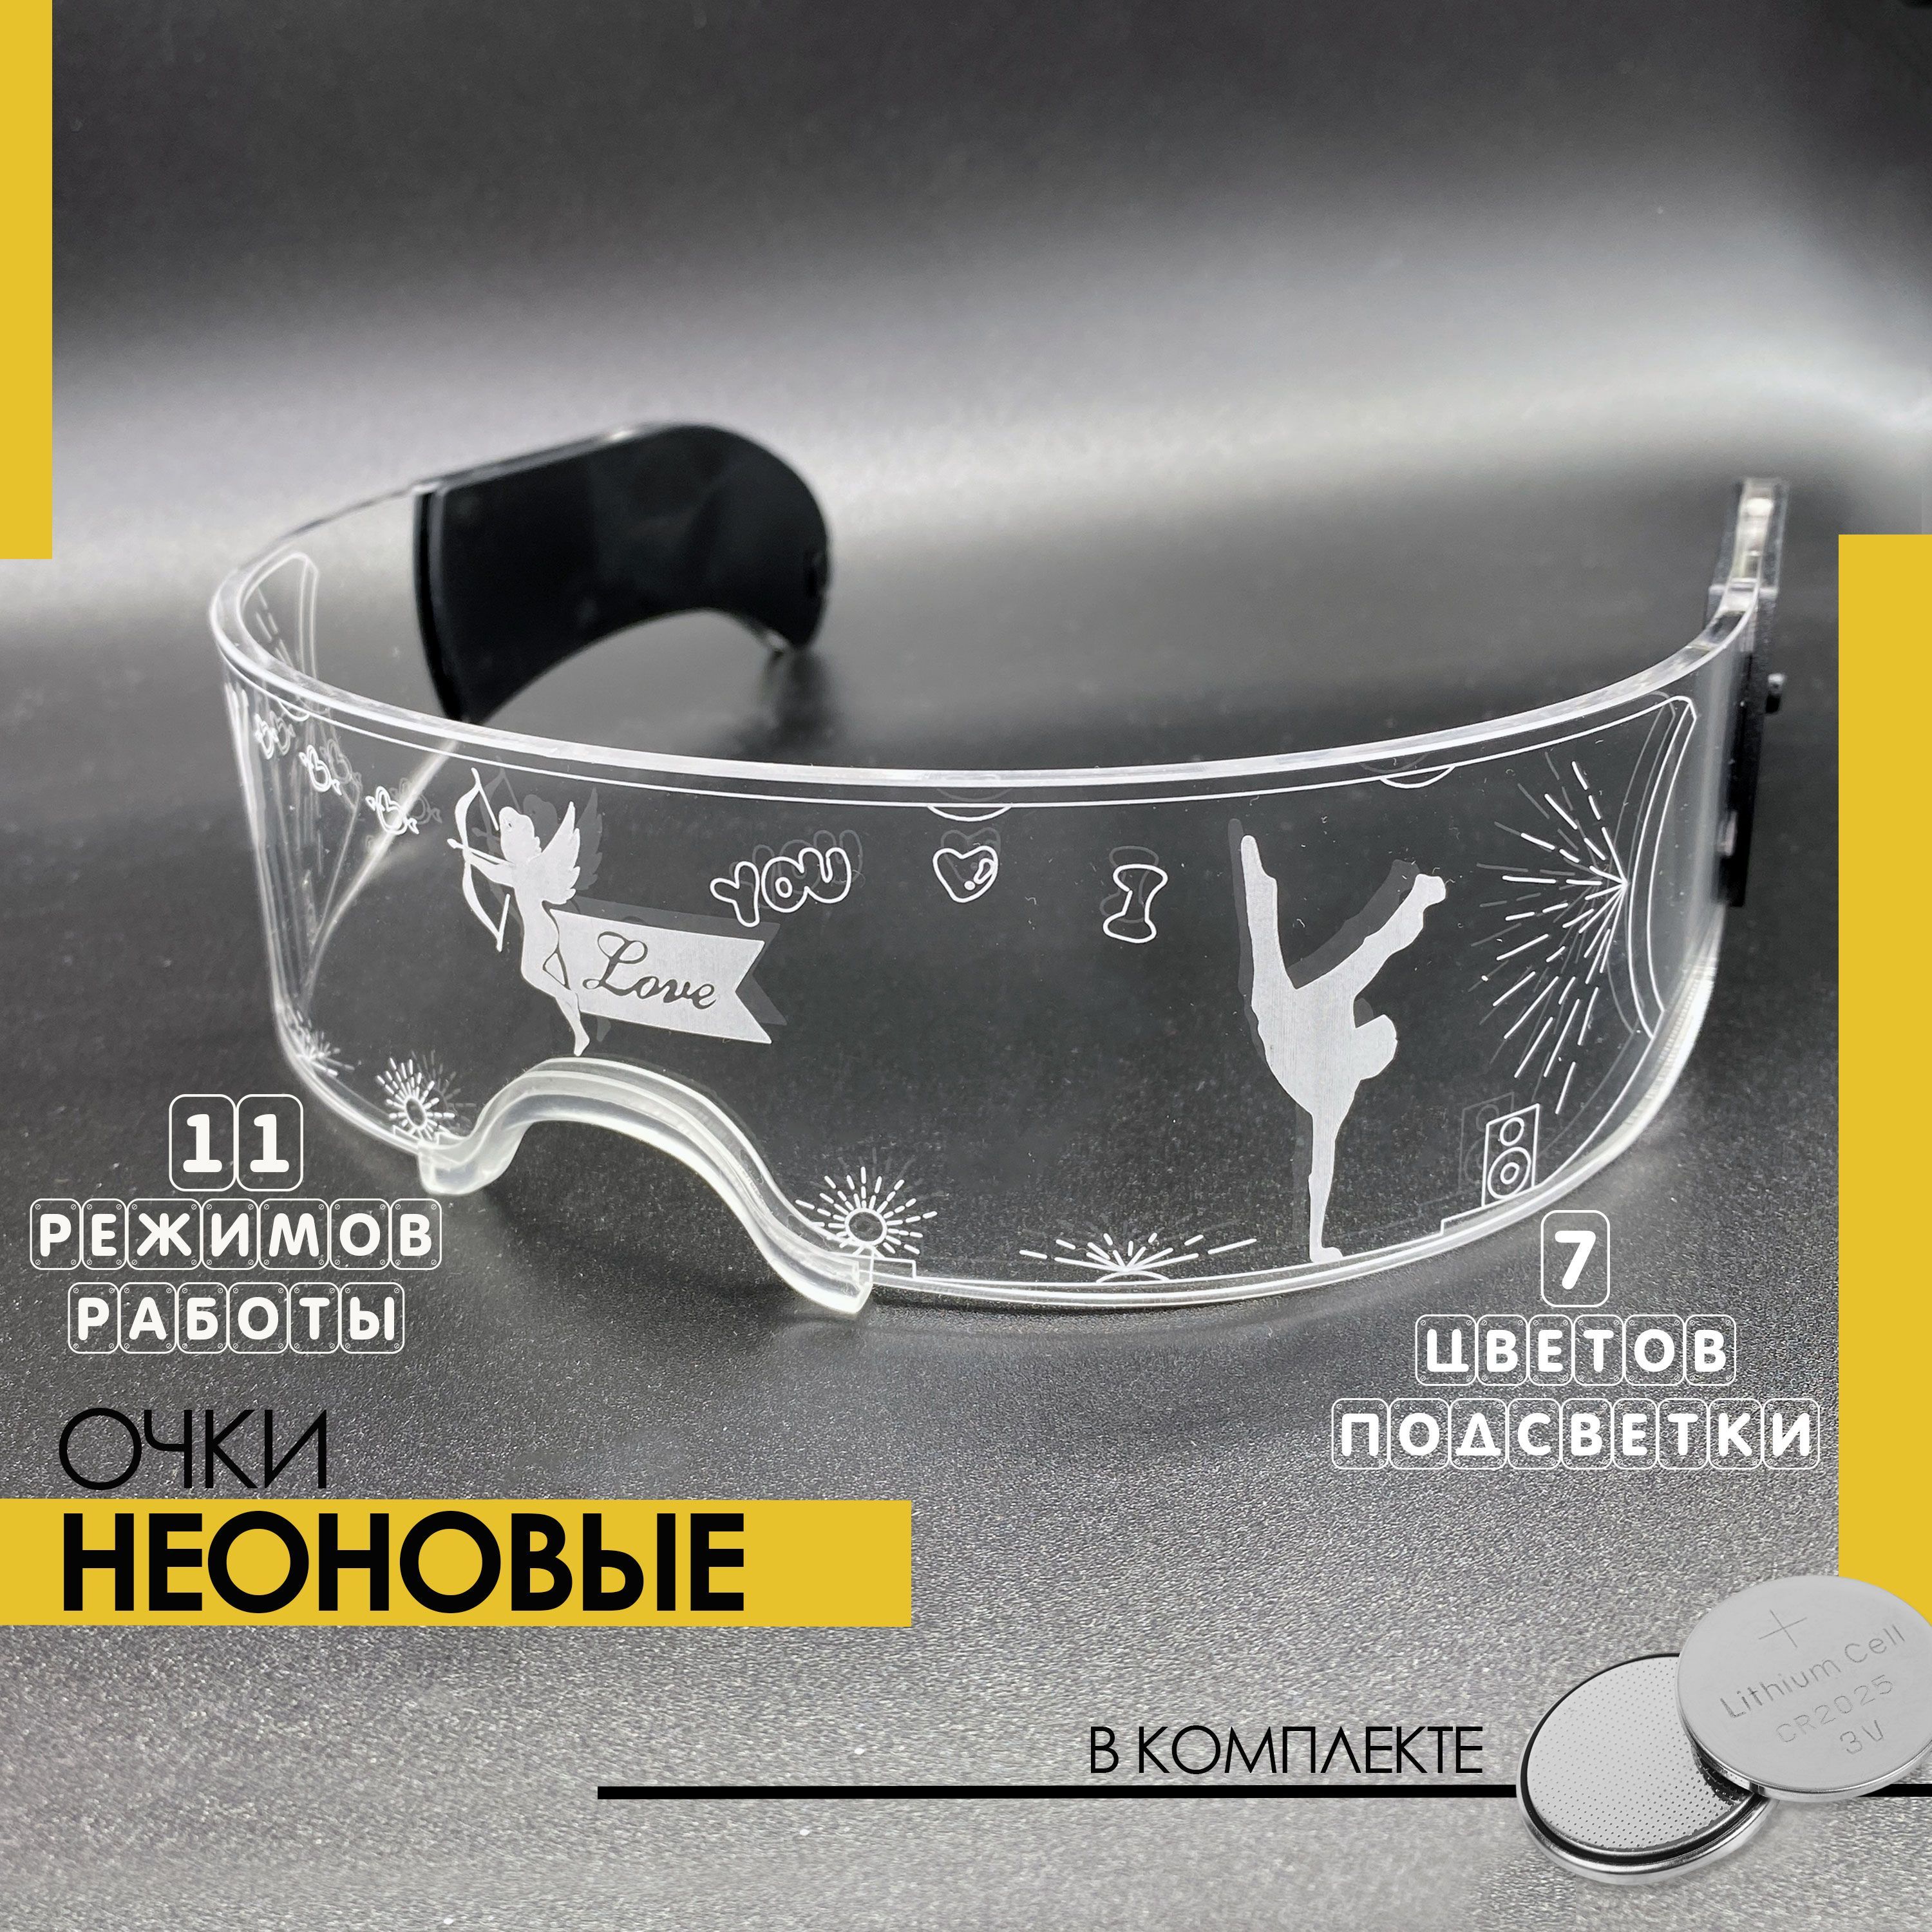 Cyberpunk очки характеристик чит фото 92